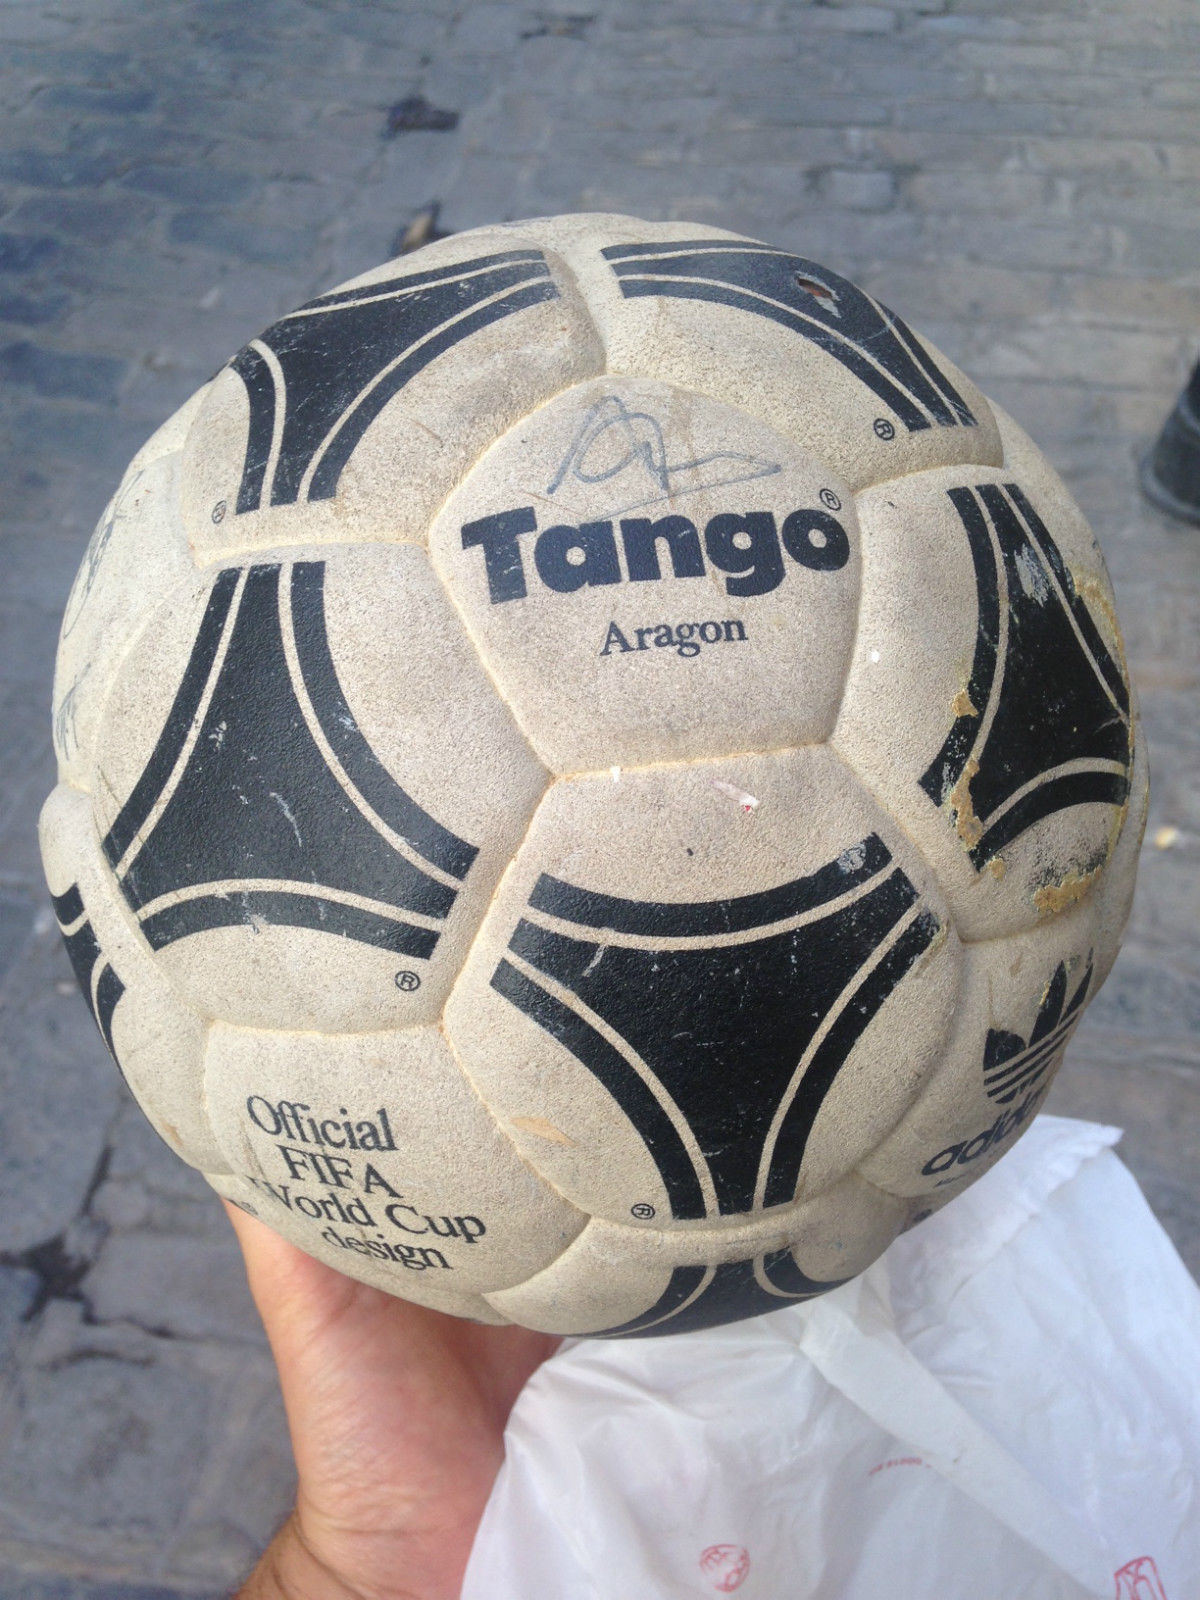 Contando insectos estafador Legibilidad Balones de Epoca: Balón Adidas Tango Aragón. Tango España 1982